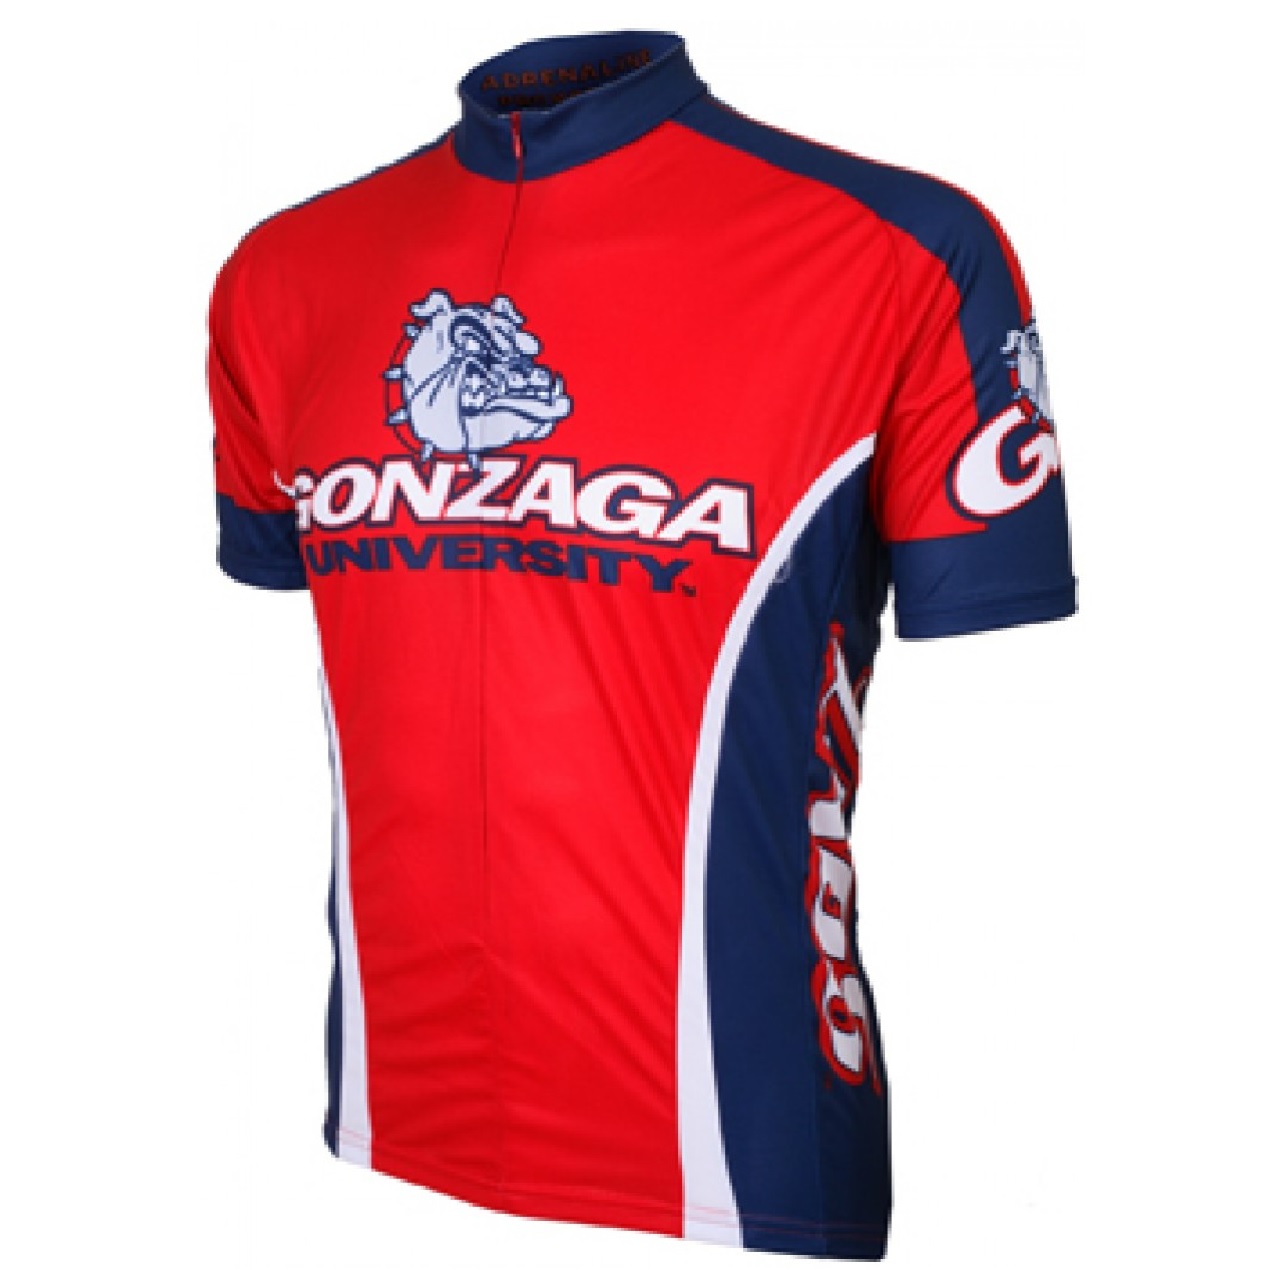 Adrenaline Promo Gonzaga University 3/4 zip Men's Cycling Jersey